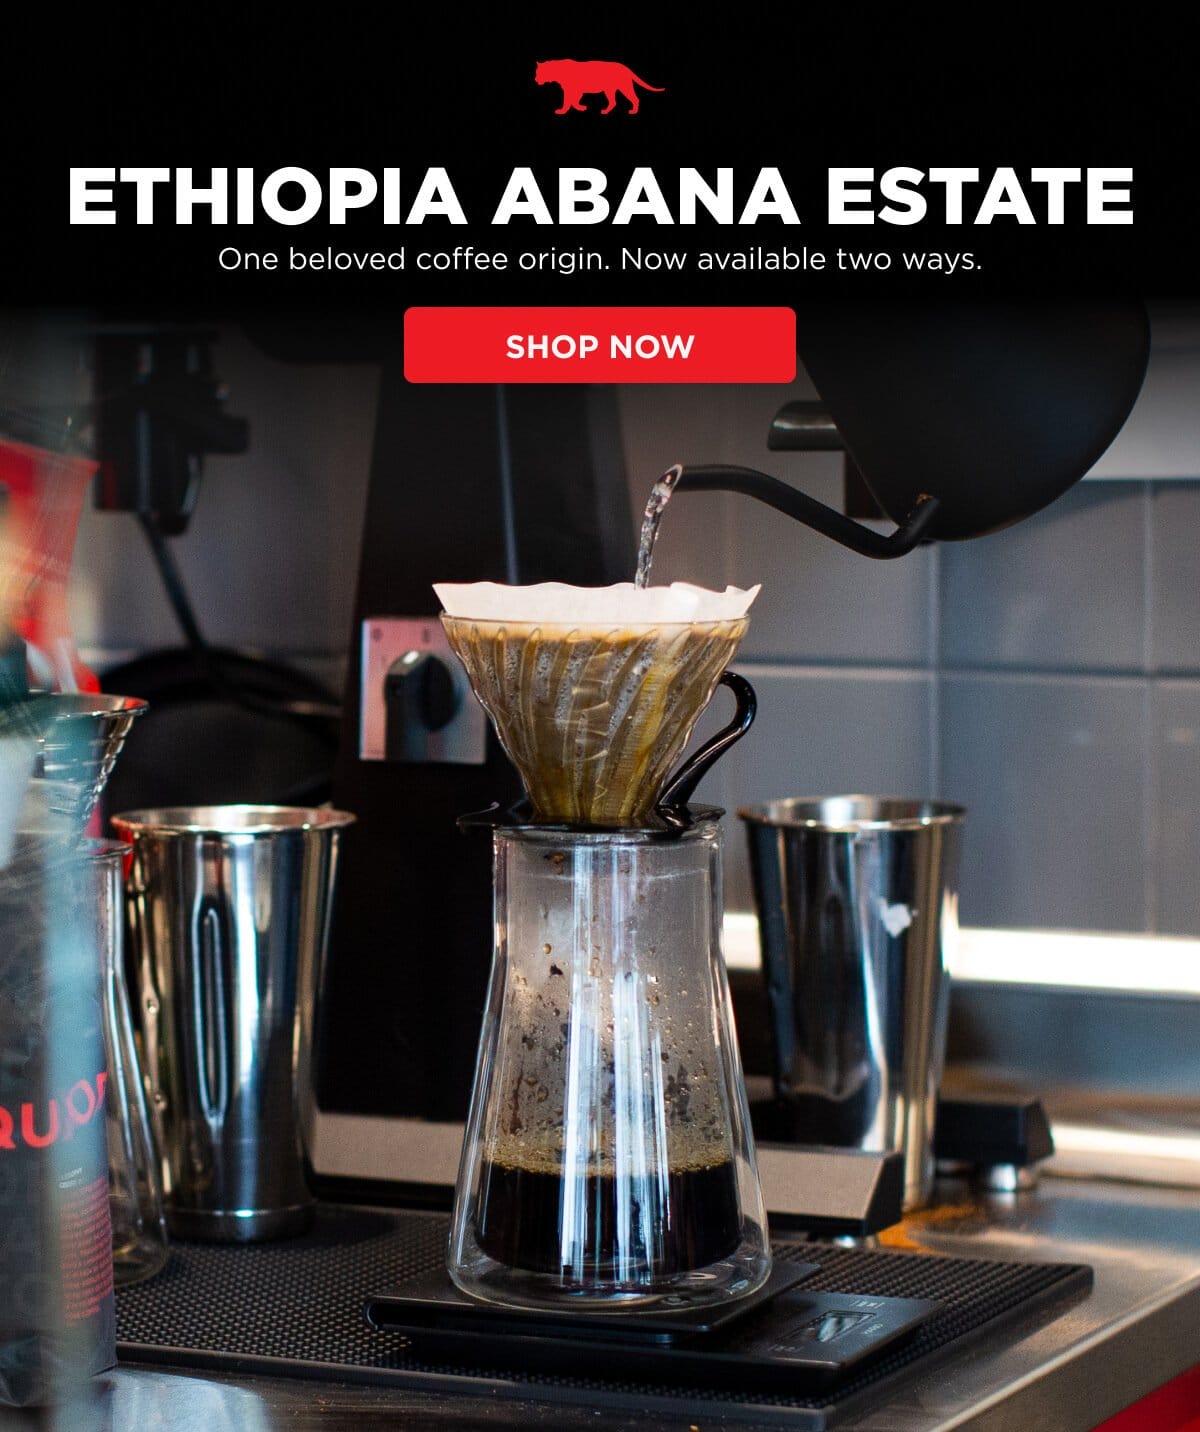 Ethiopia Abana Estate: One beloved coffee, two ways